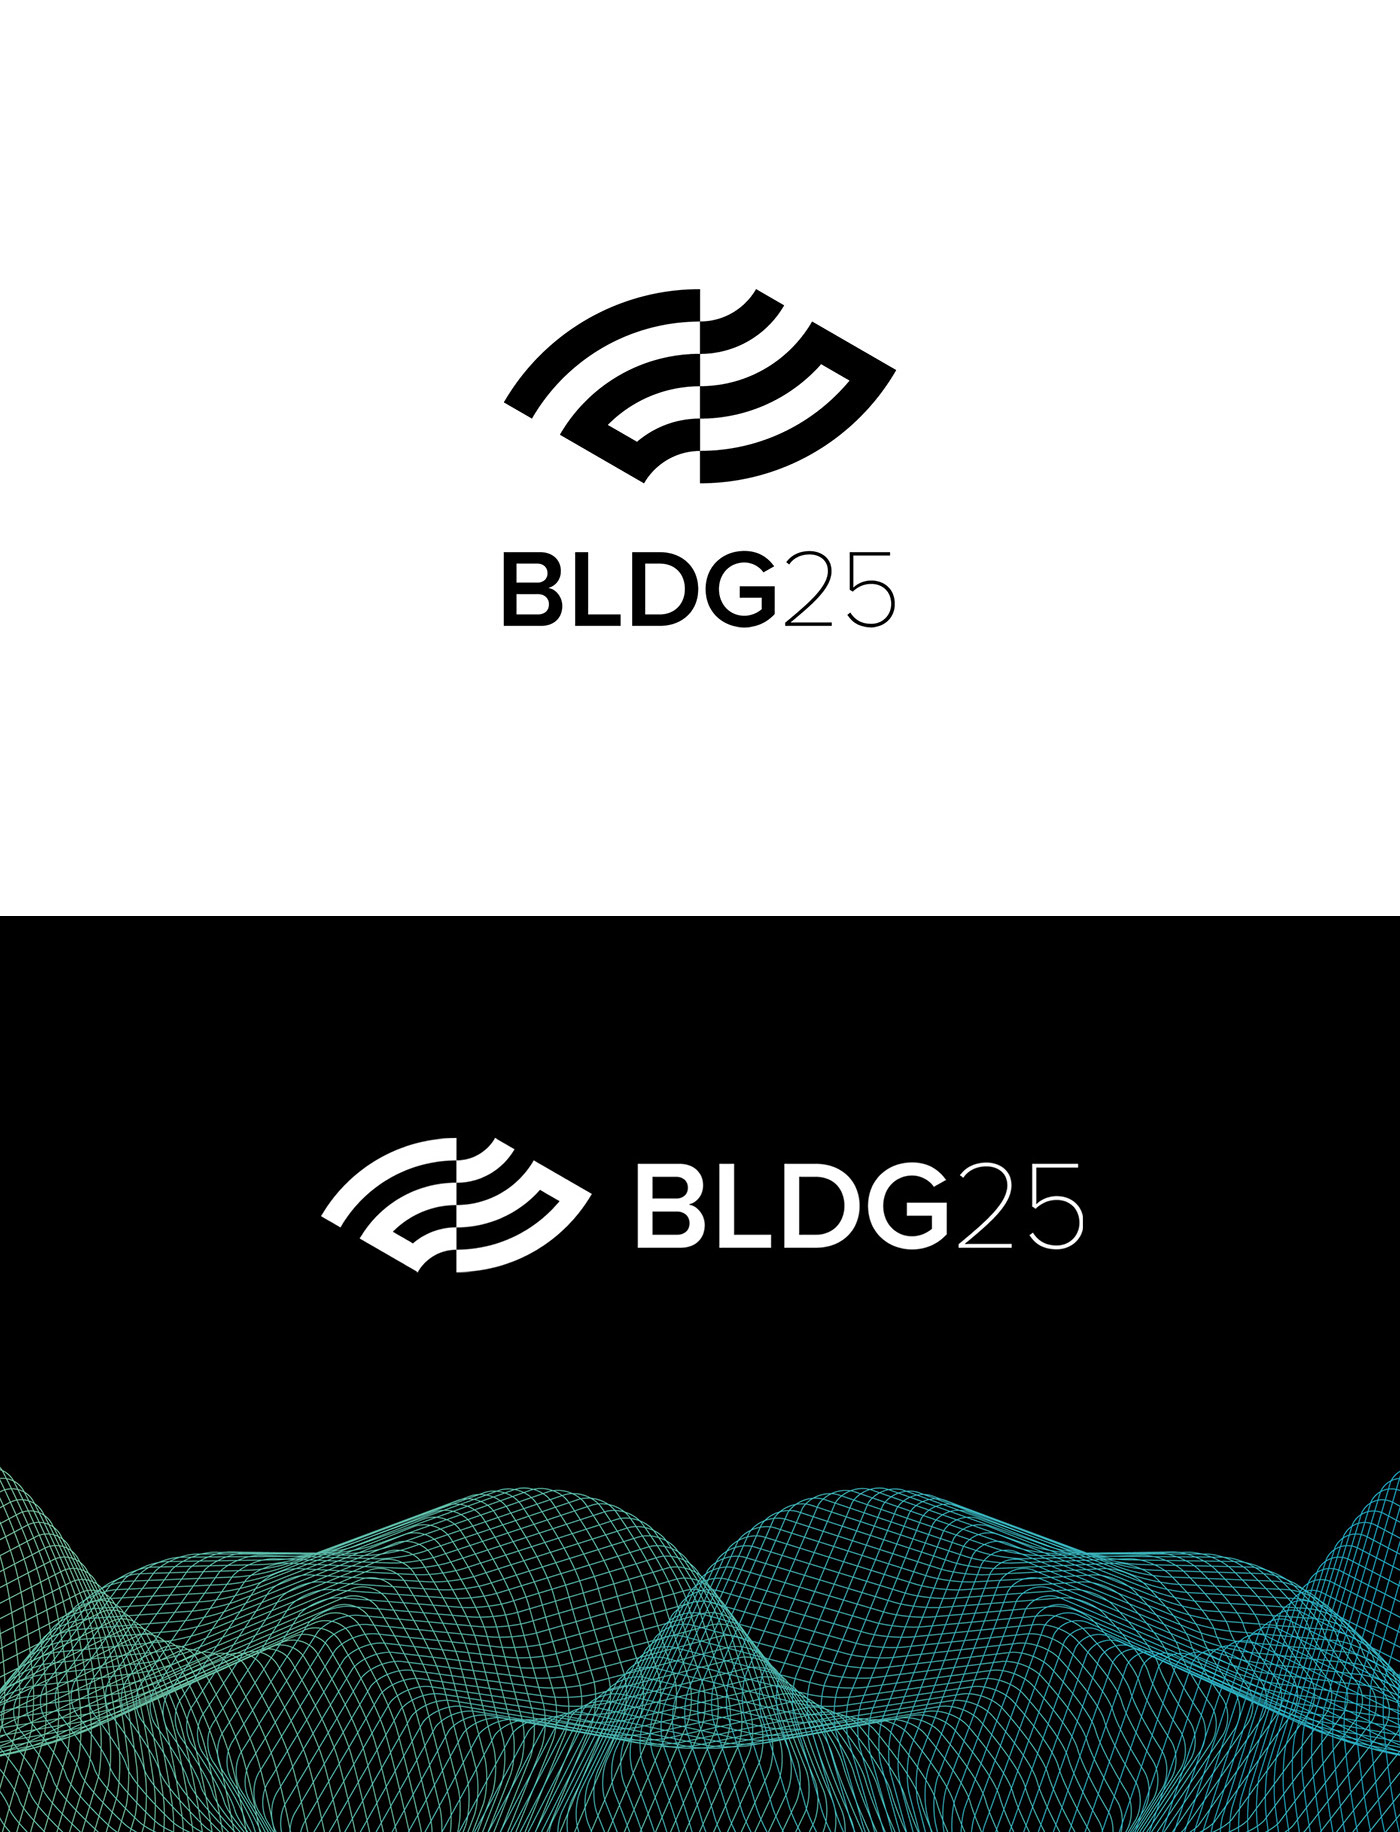 BLDG25 - graphic design and branding by TRÜF